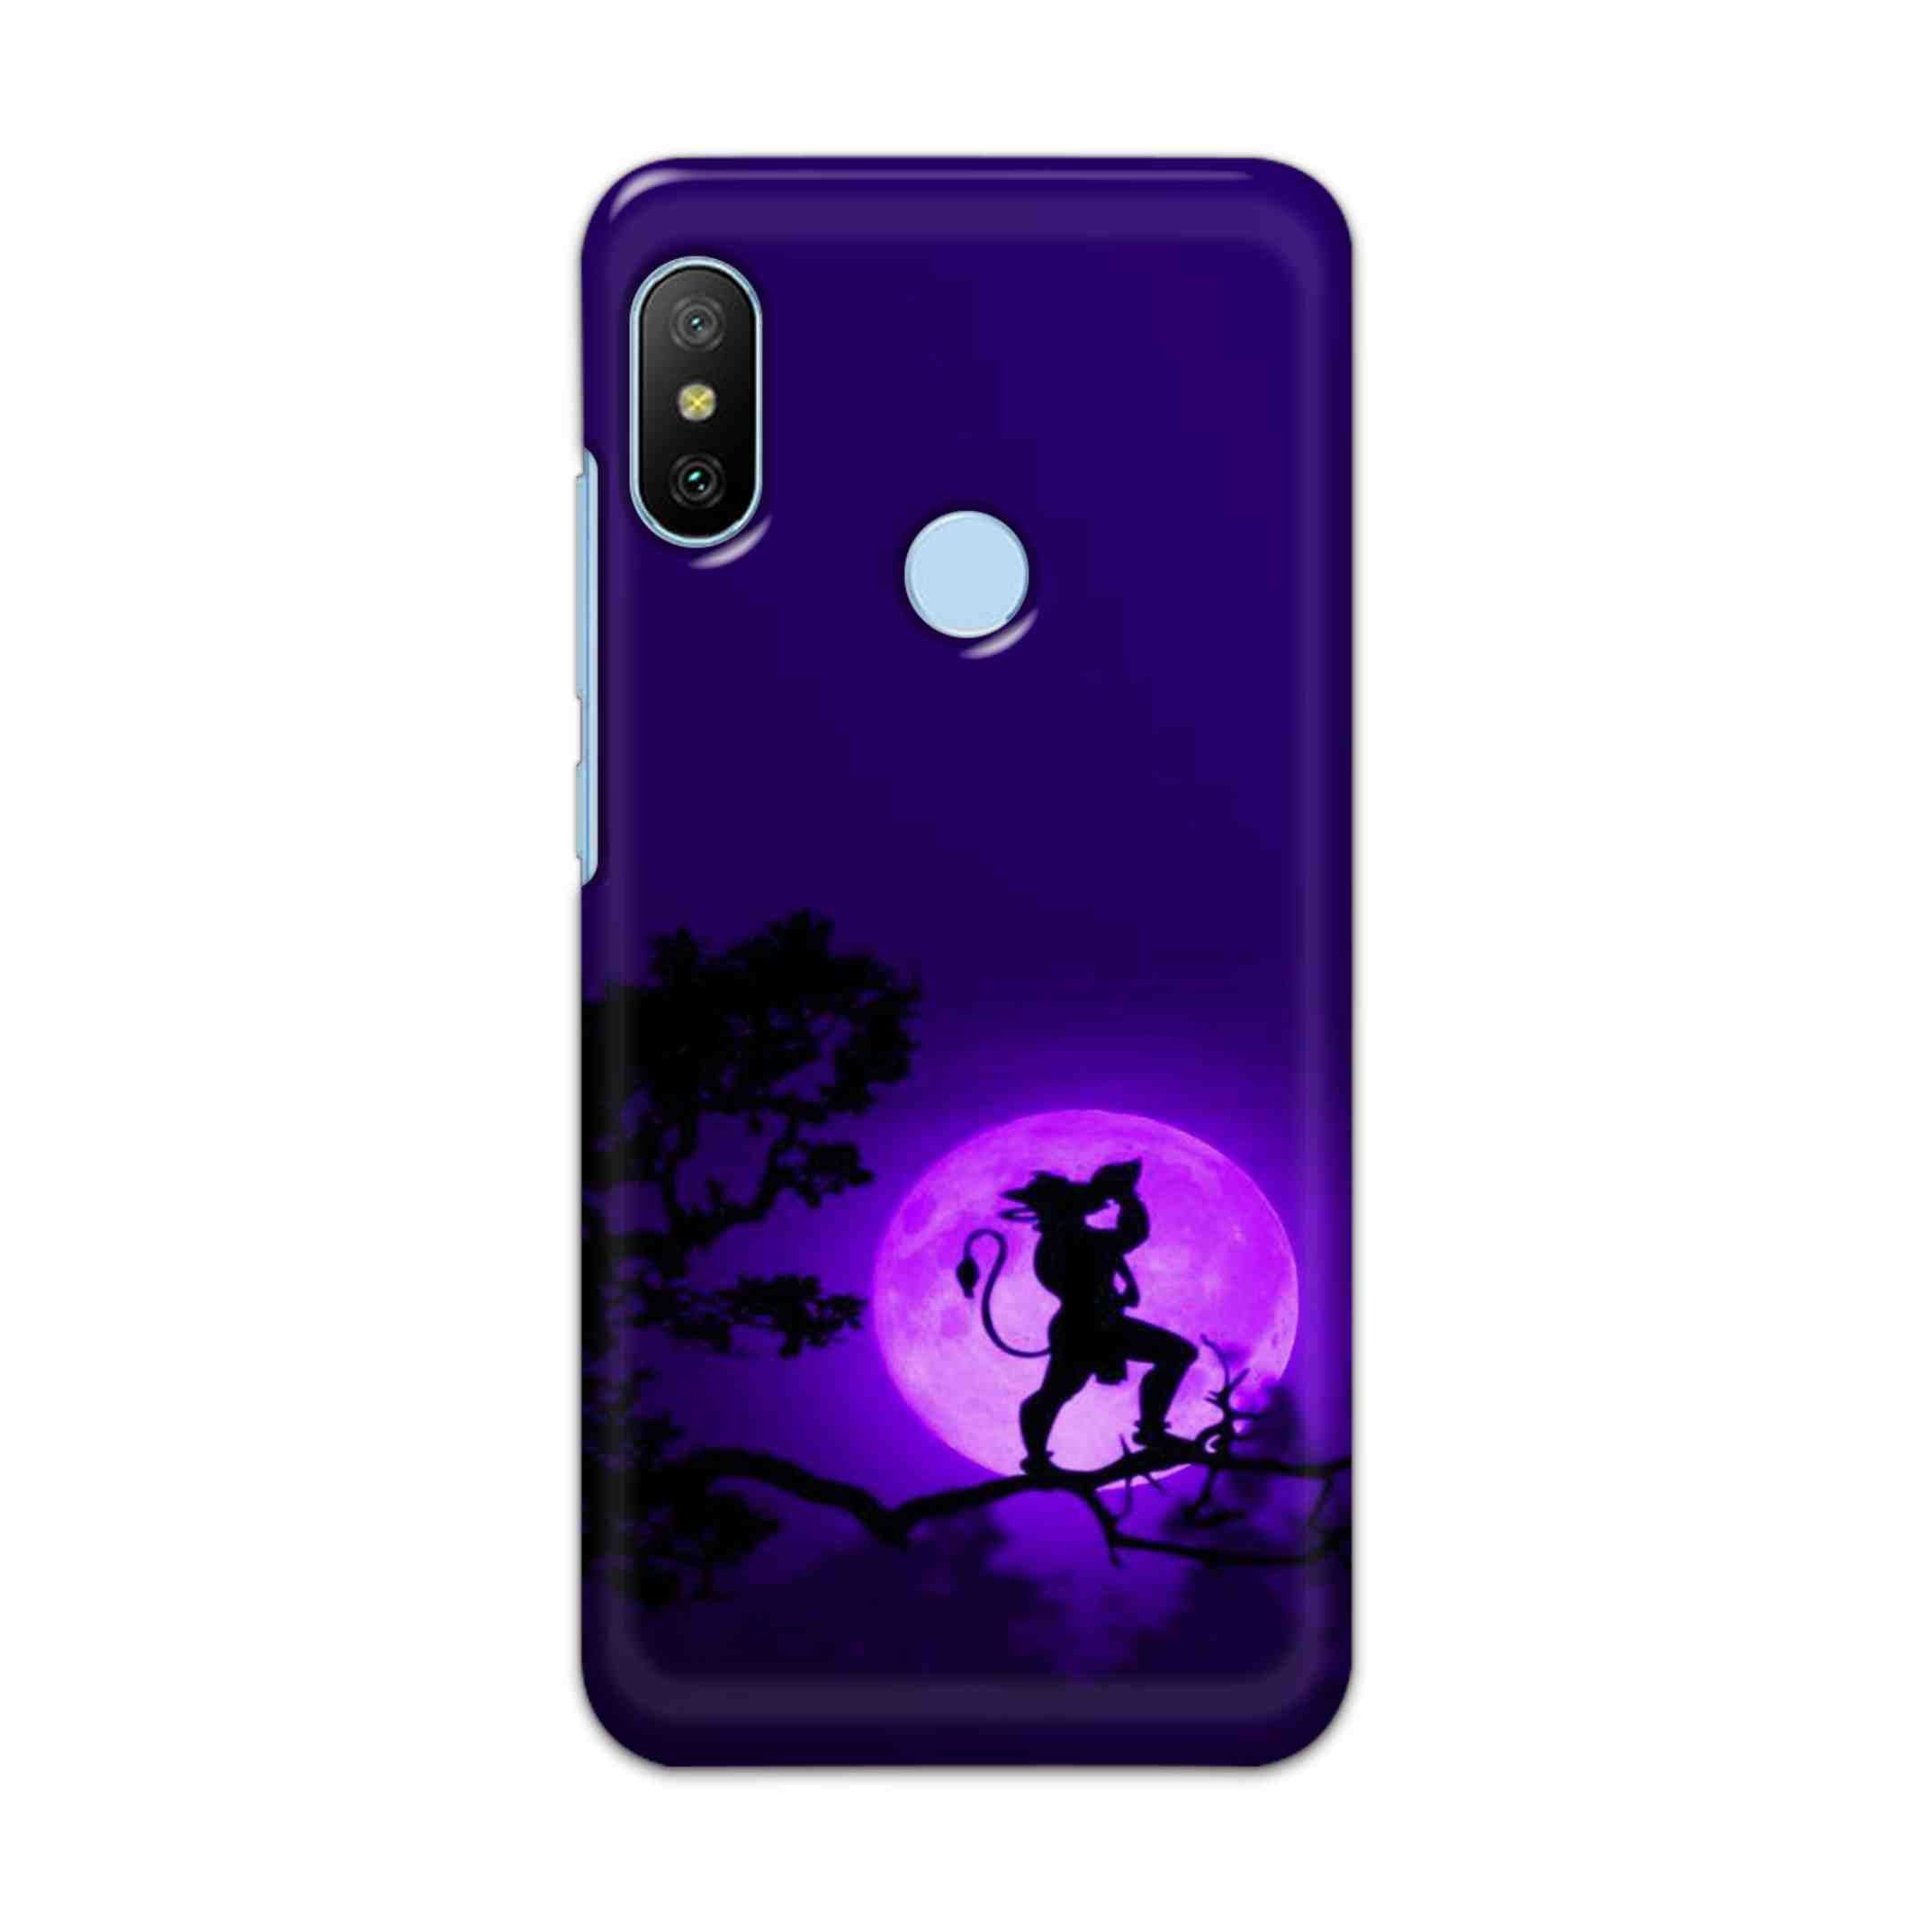 Buy Hanuman Hard Back Mobile Phone Case/Cover For Xiaomi Redmi 6 Pro Online